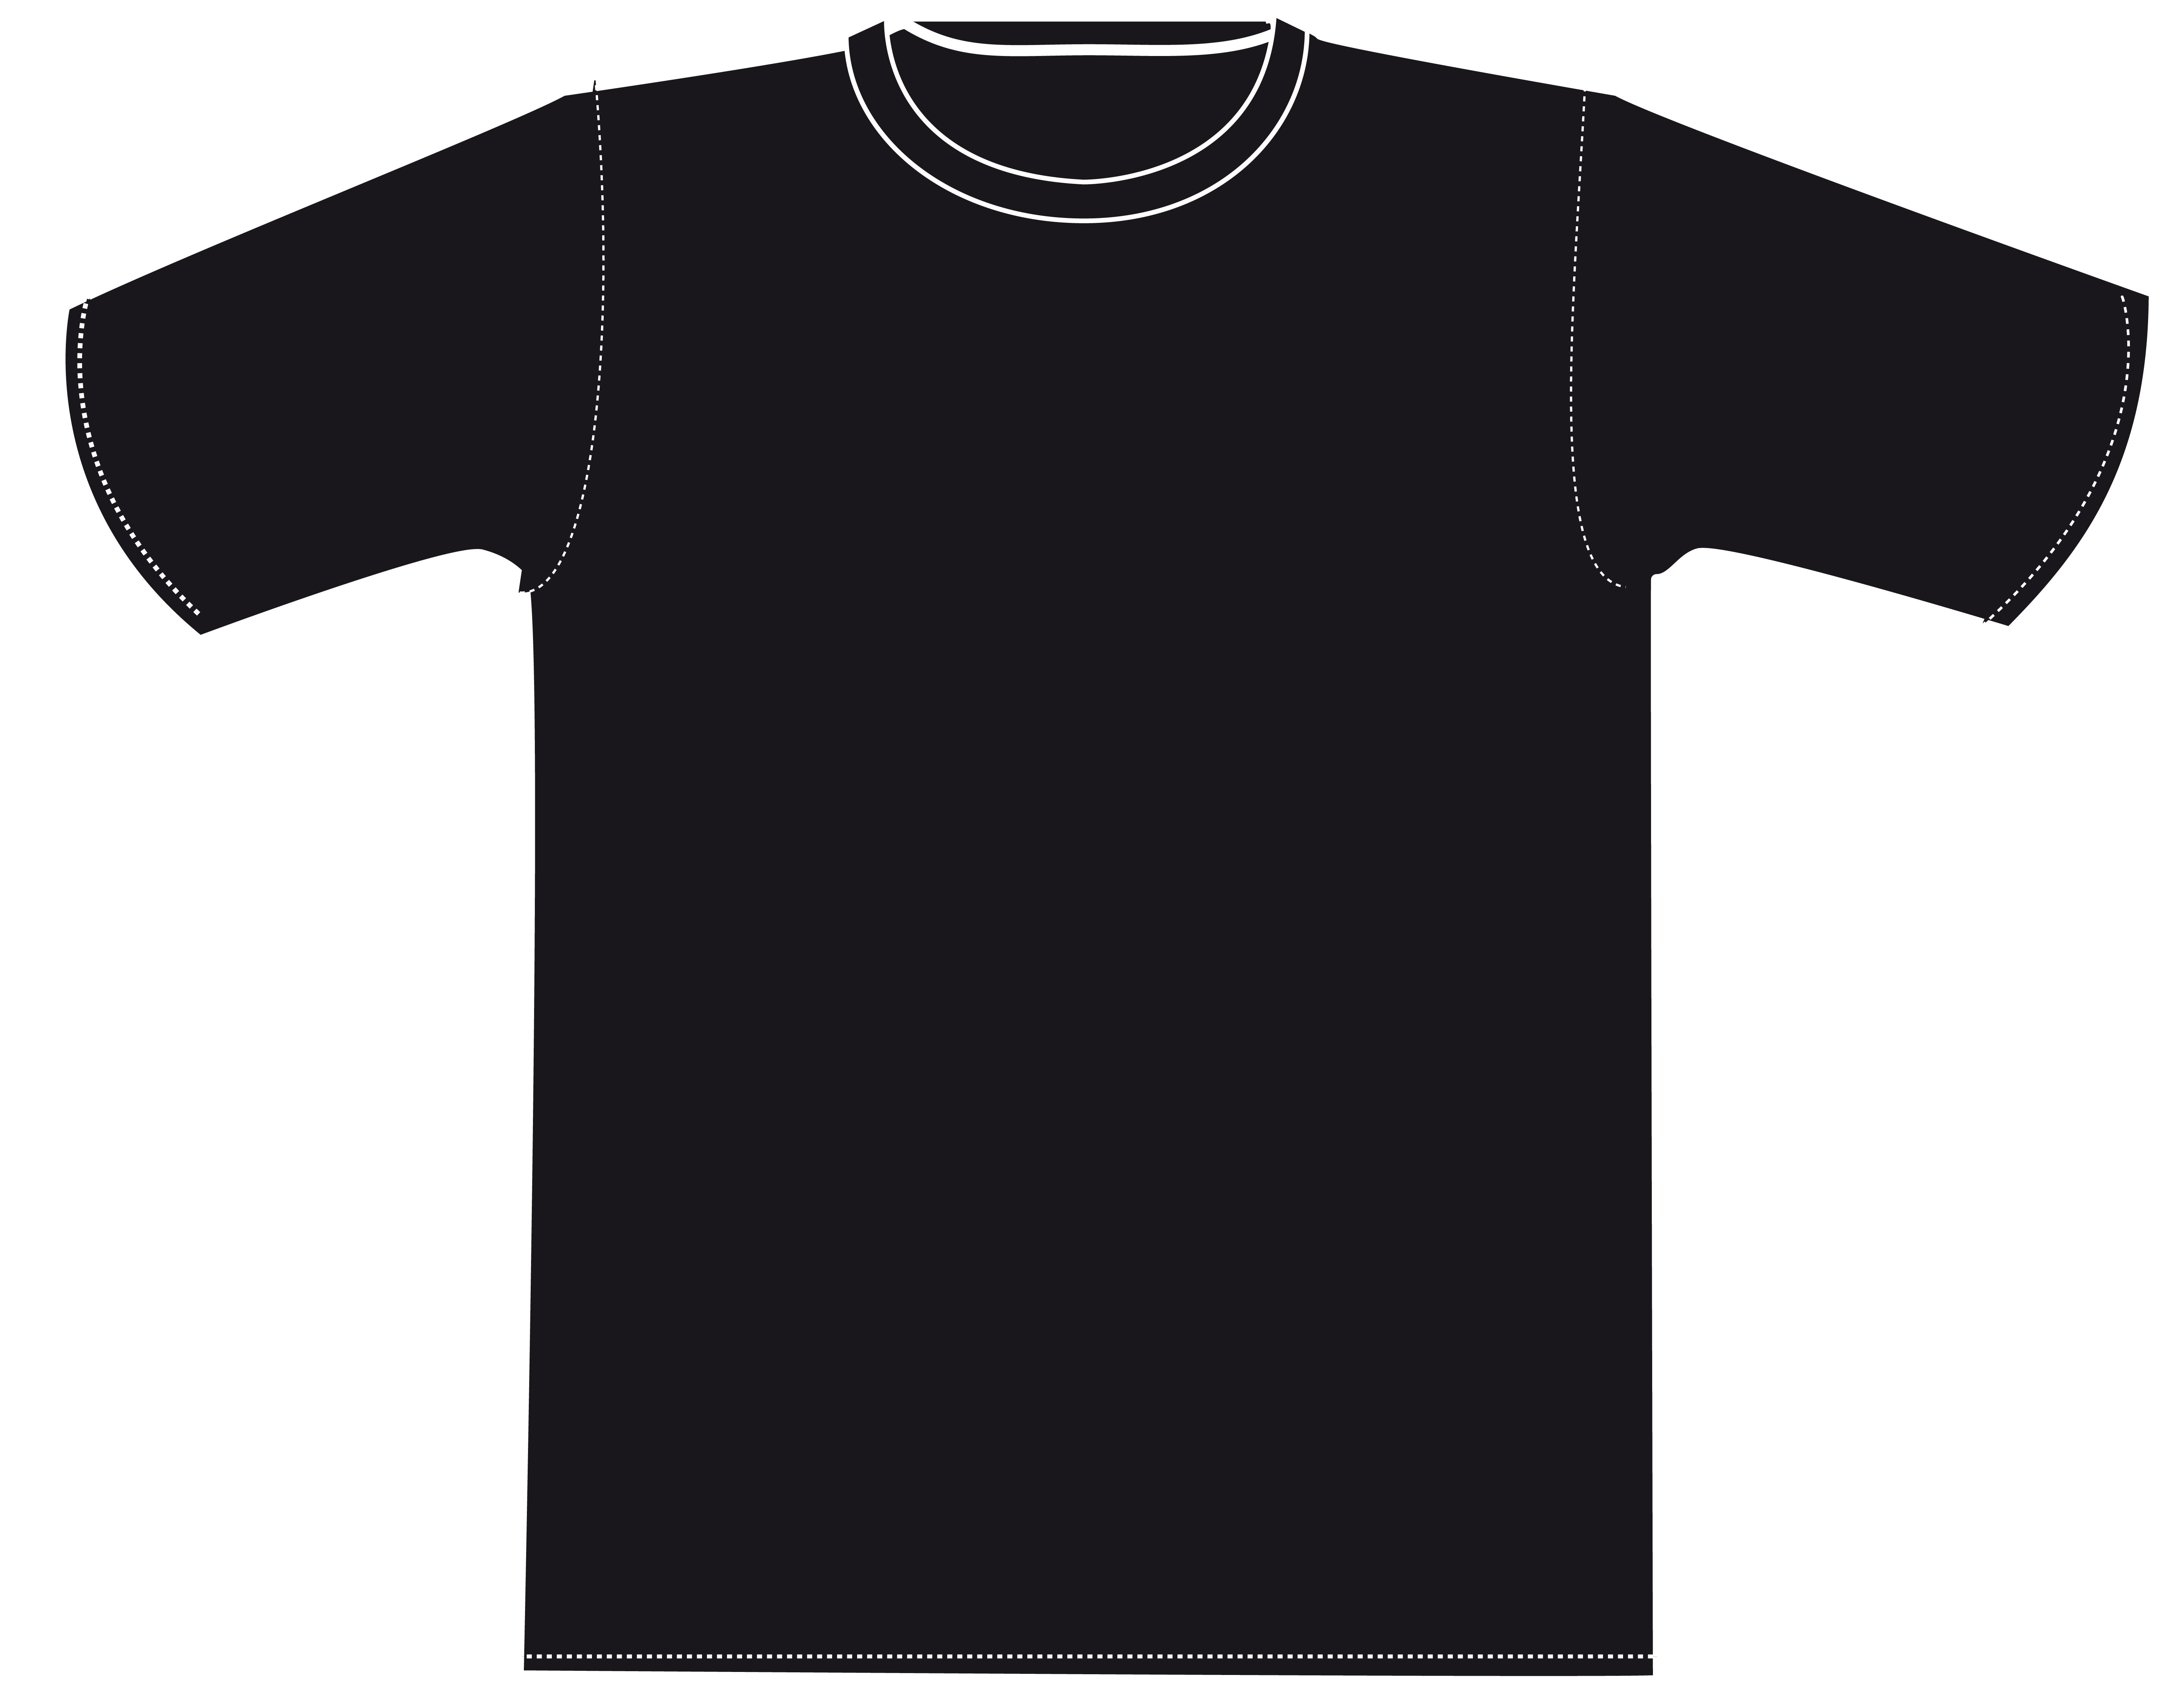 Black T Shirt Outline Clipart Best - Bank2home.com